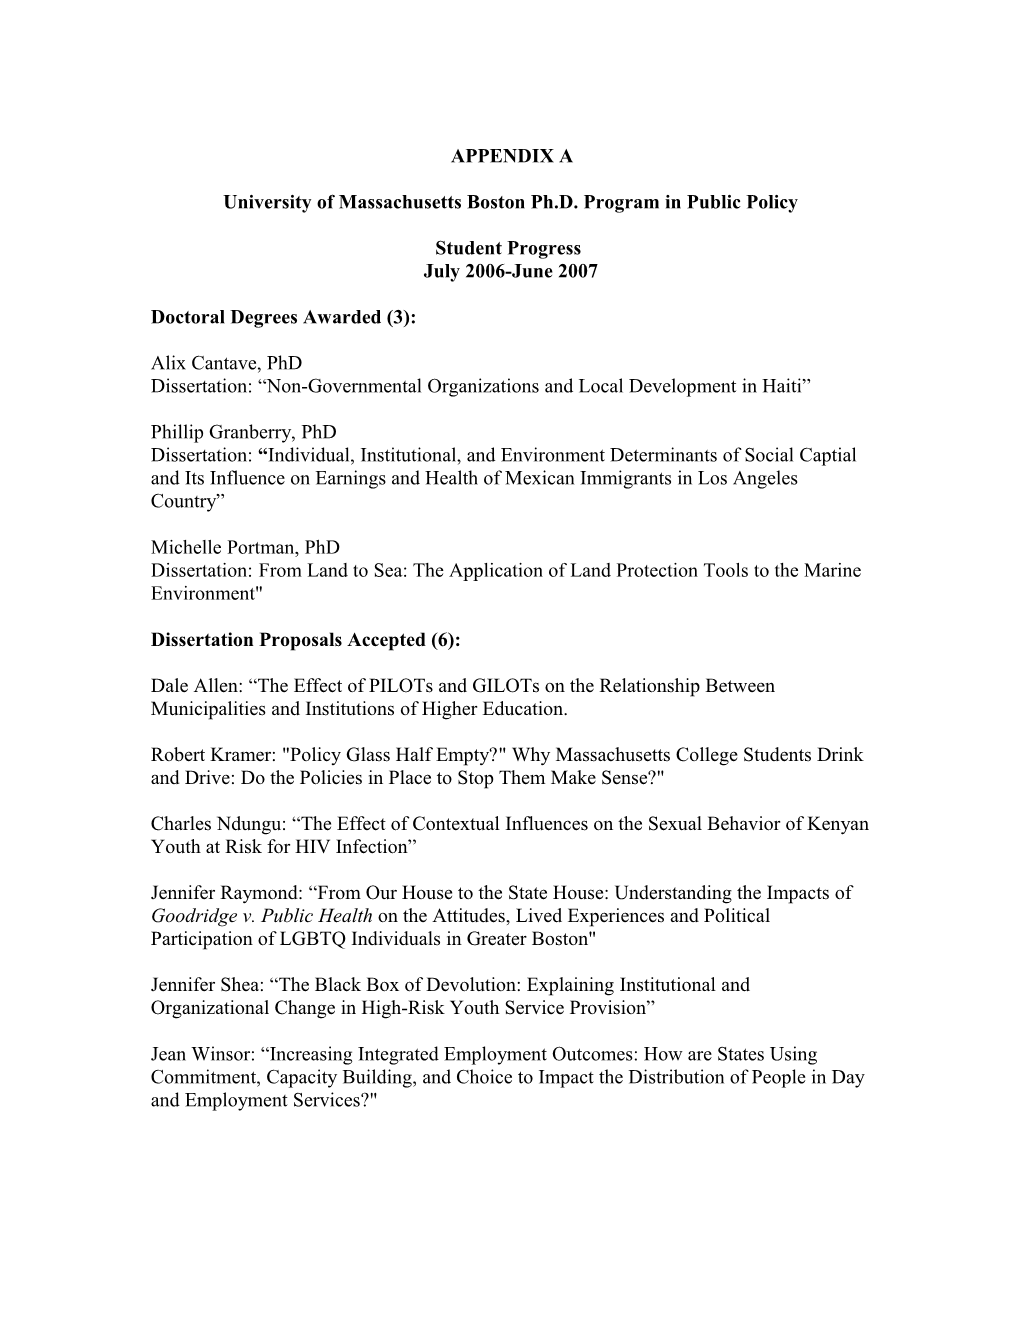 University of Massachusetts Boston Ph.D. Program in Public Policy